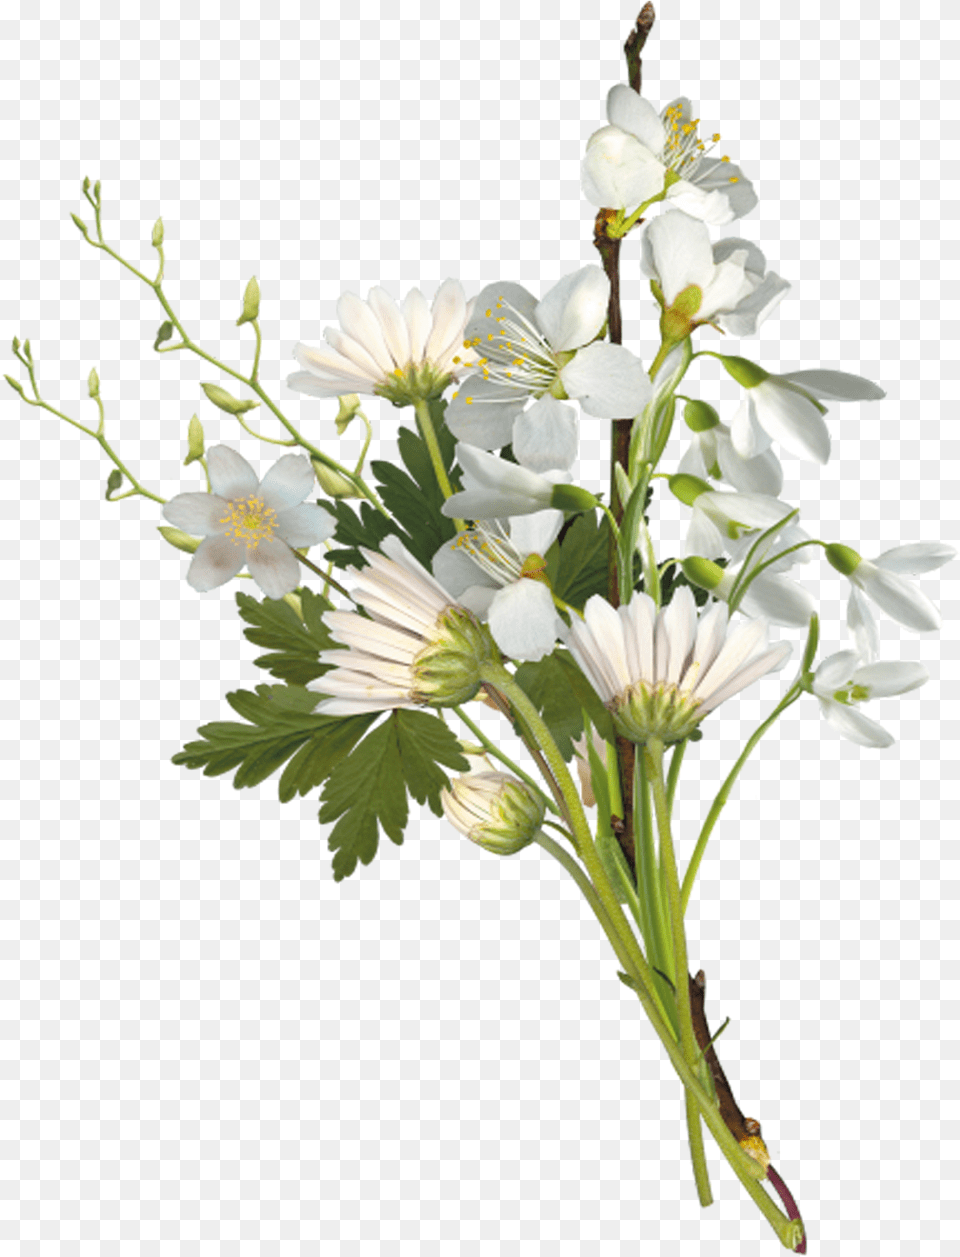 Black And White Flower Bouquet Clipart Graphic Small Flower Bouquet, Flower Arrangement, Flower Bouquet, Plant, Pollen Free Transparent Png